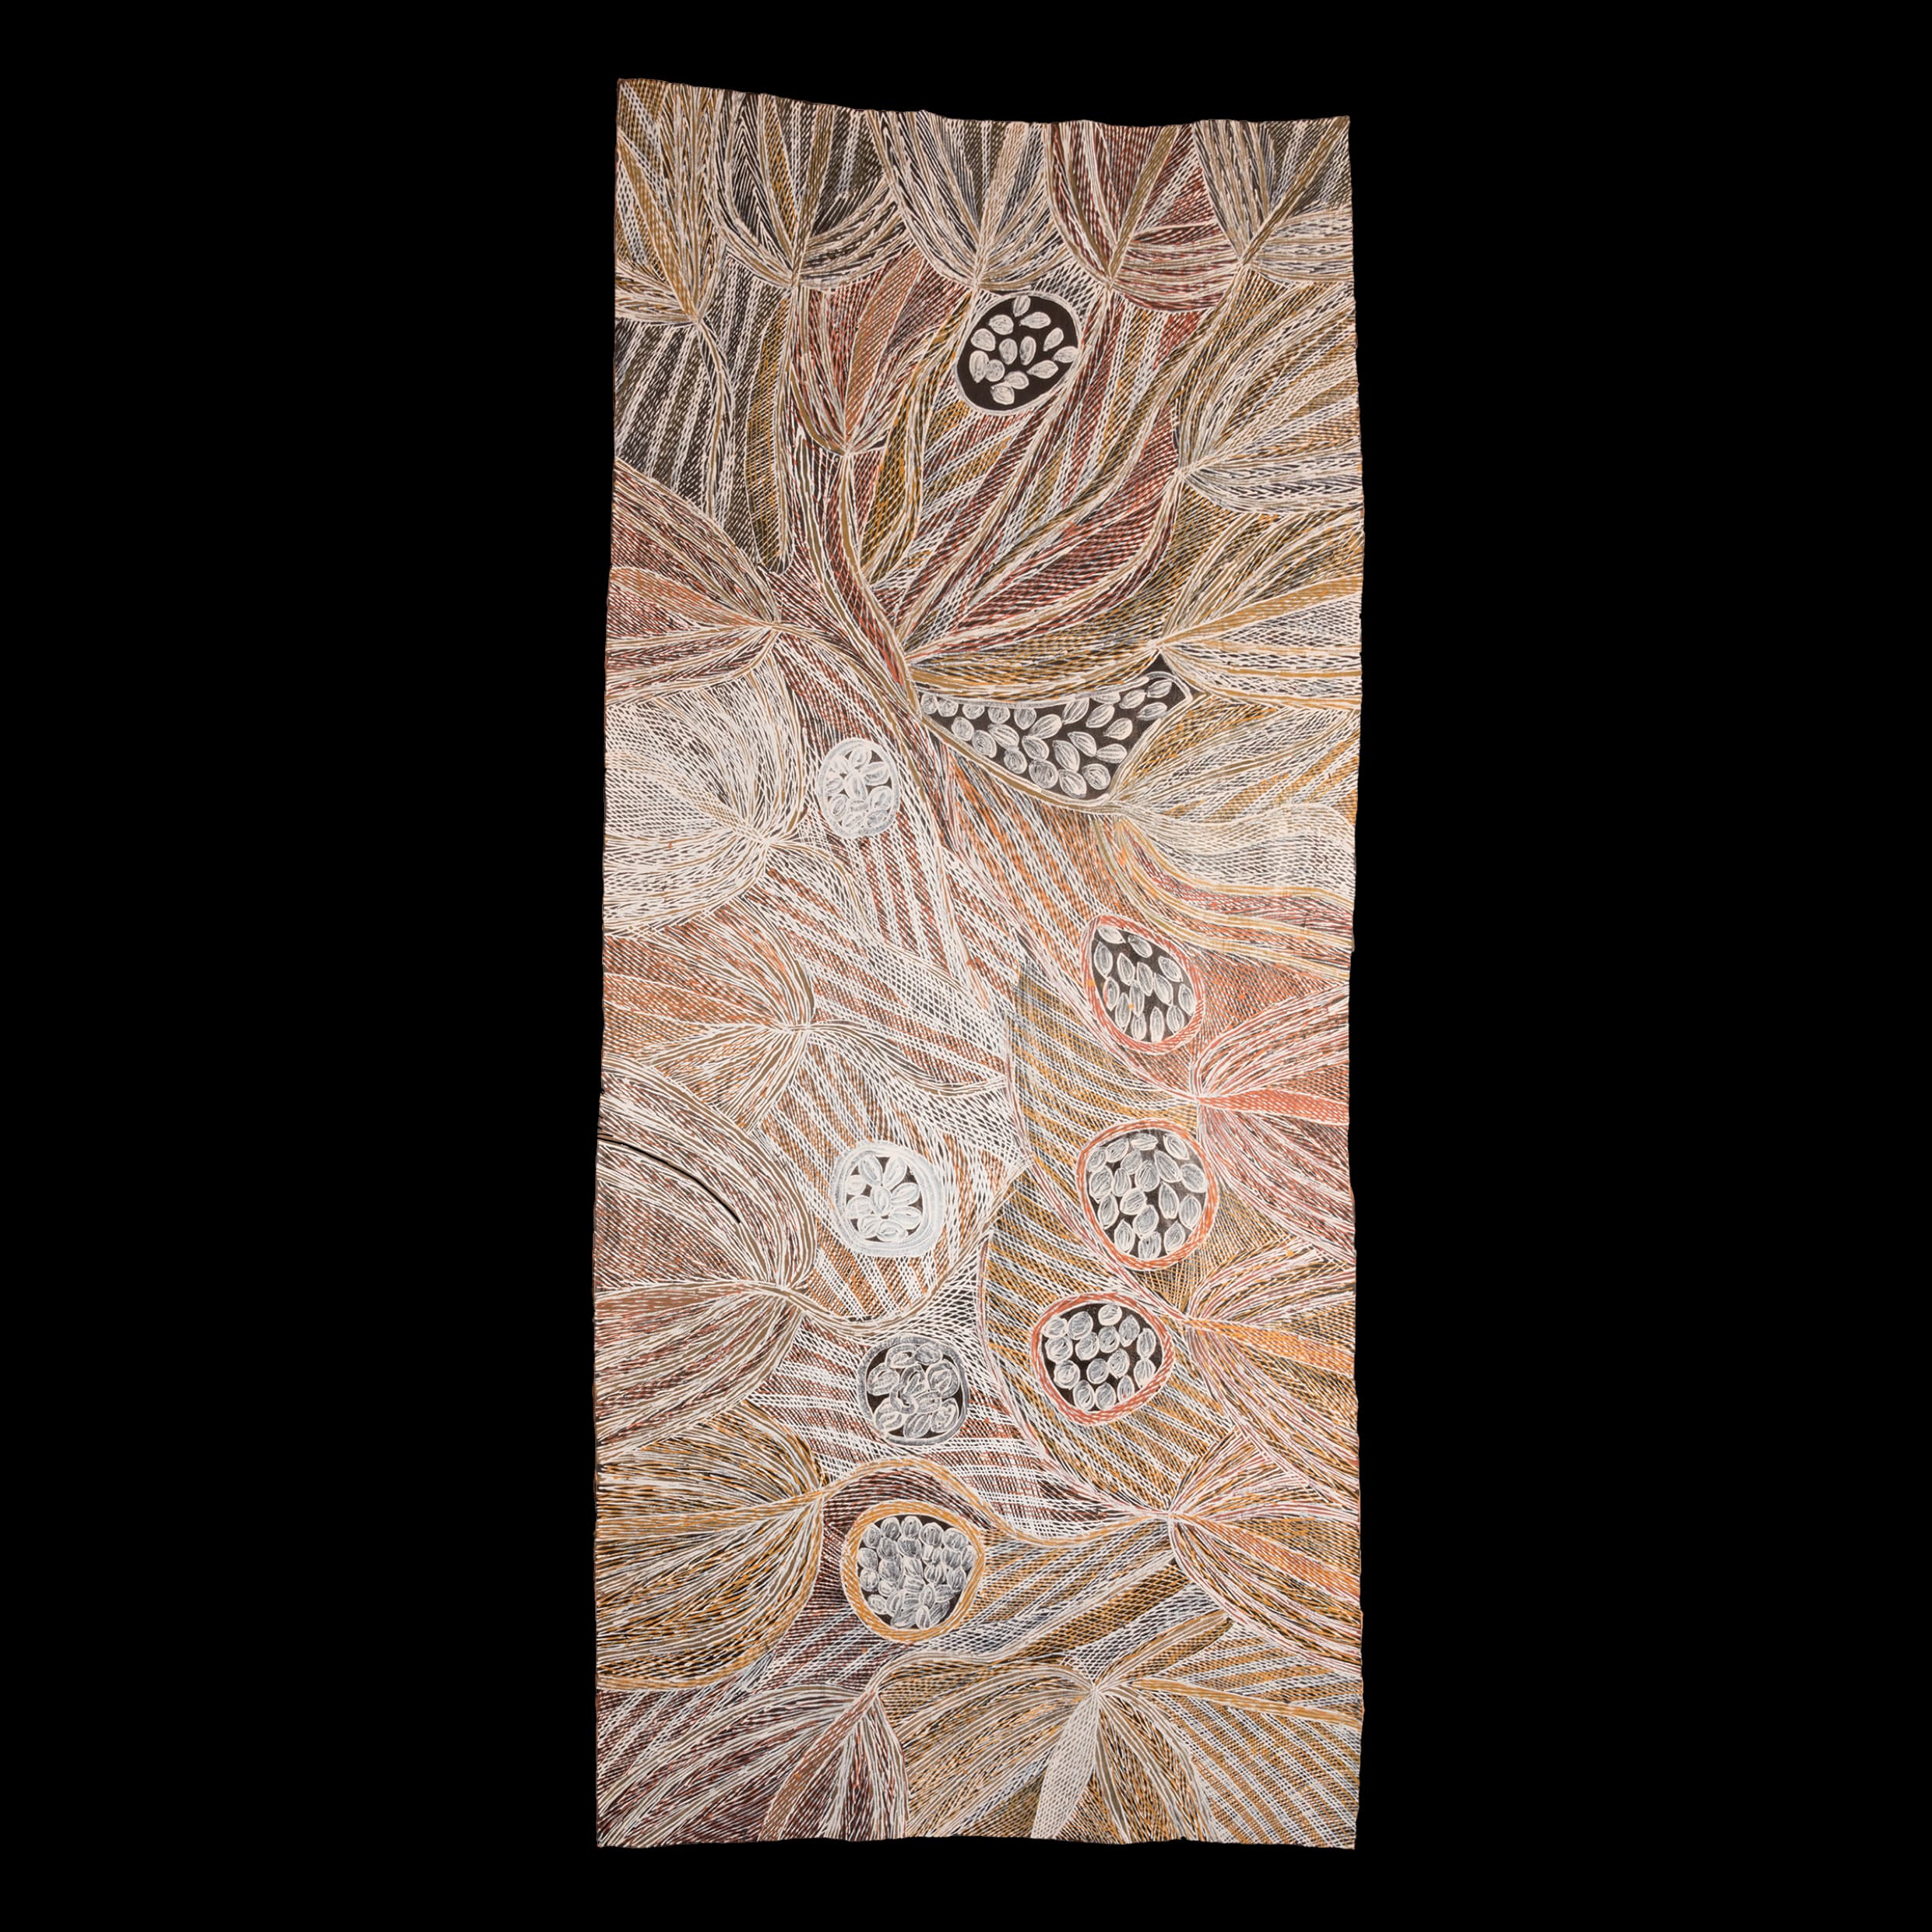 Mulkuṉ Wirrpanda (b. 1946), language: Dhudi-Djapu; clan: Dhudi-Djapu / Dha-malamirr; moiety: Dhuwa; lives Yirrkala, NT; Baby teeth in the gunga, 2019, earth pigments on stringybark (bark painting),  209.0 × 88.5 cm. HFADM 3740, Henry Forman Atkinson Dental Museum, University of Melbourne. 